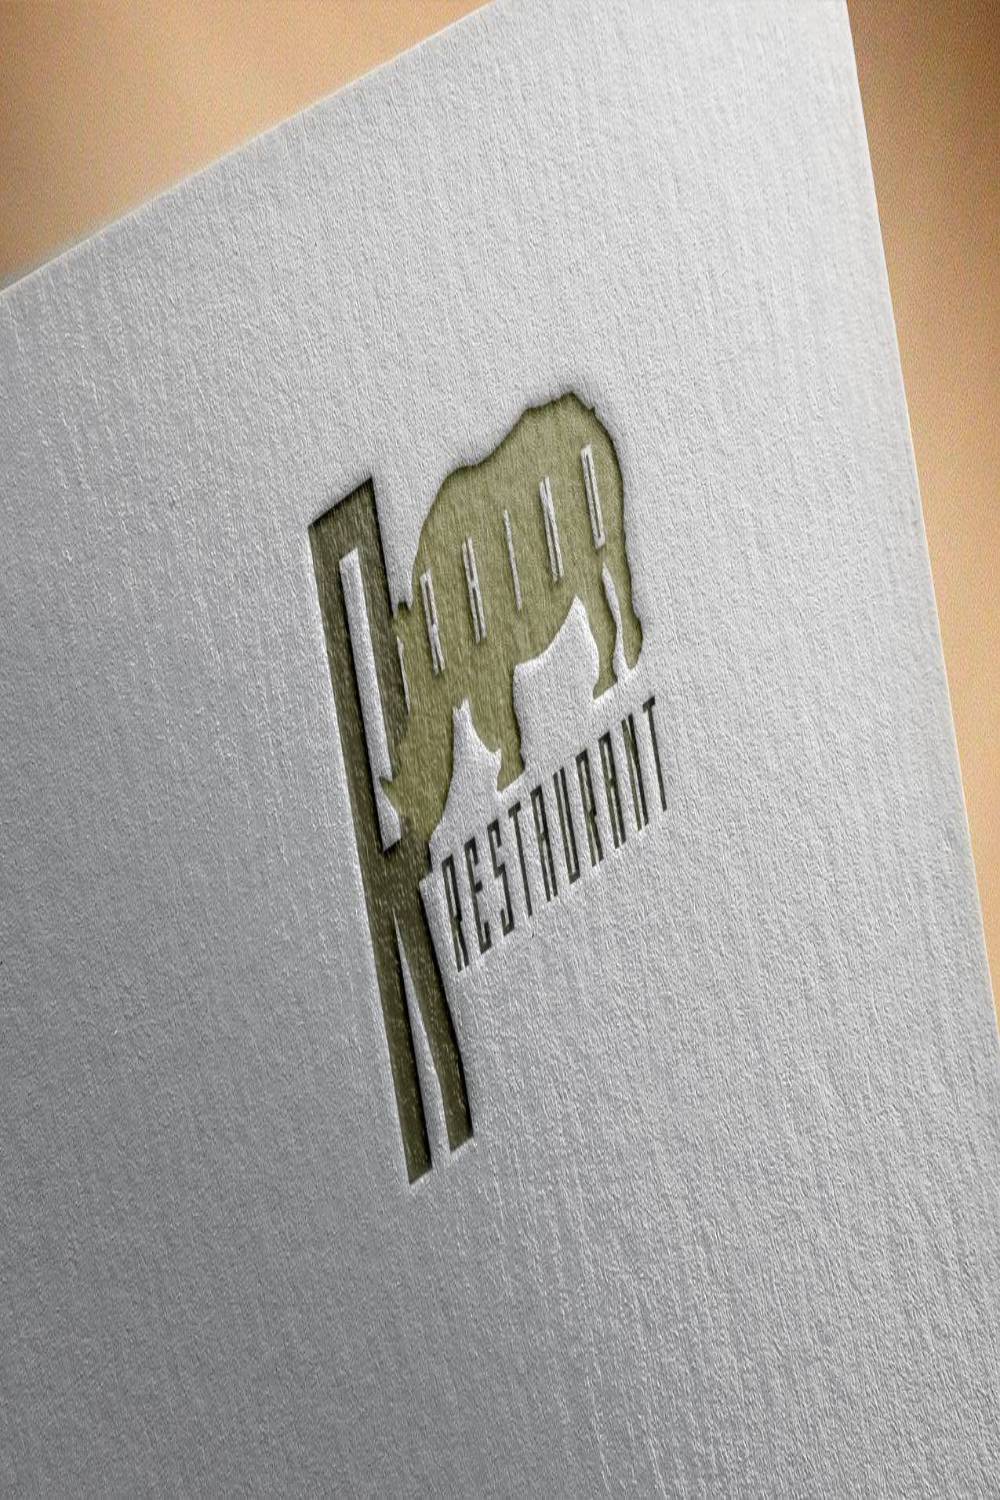 Restaurant Rhino Logo Design pinterest image.